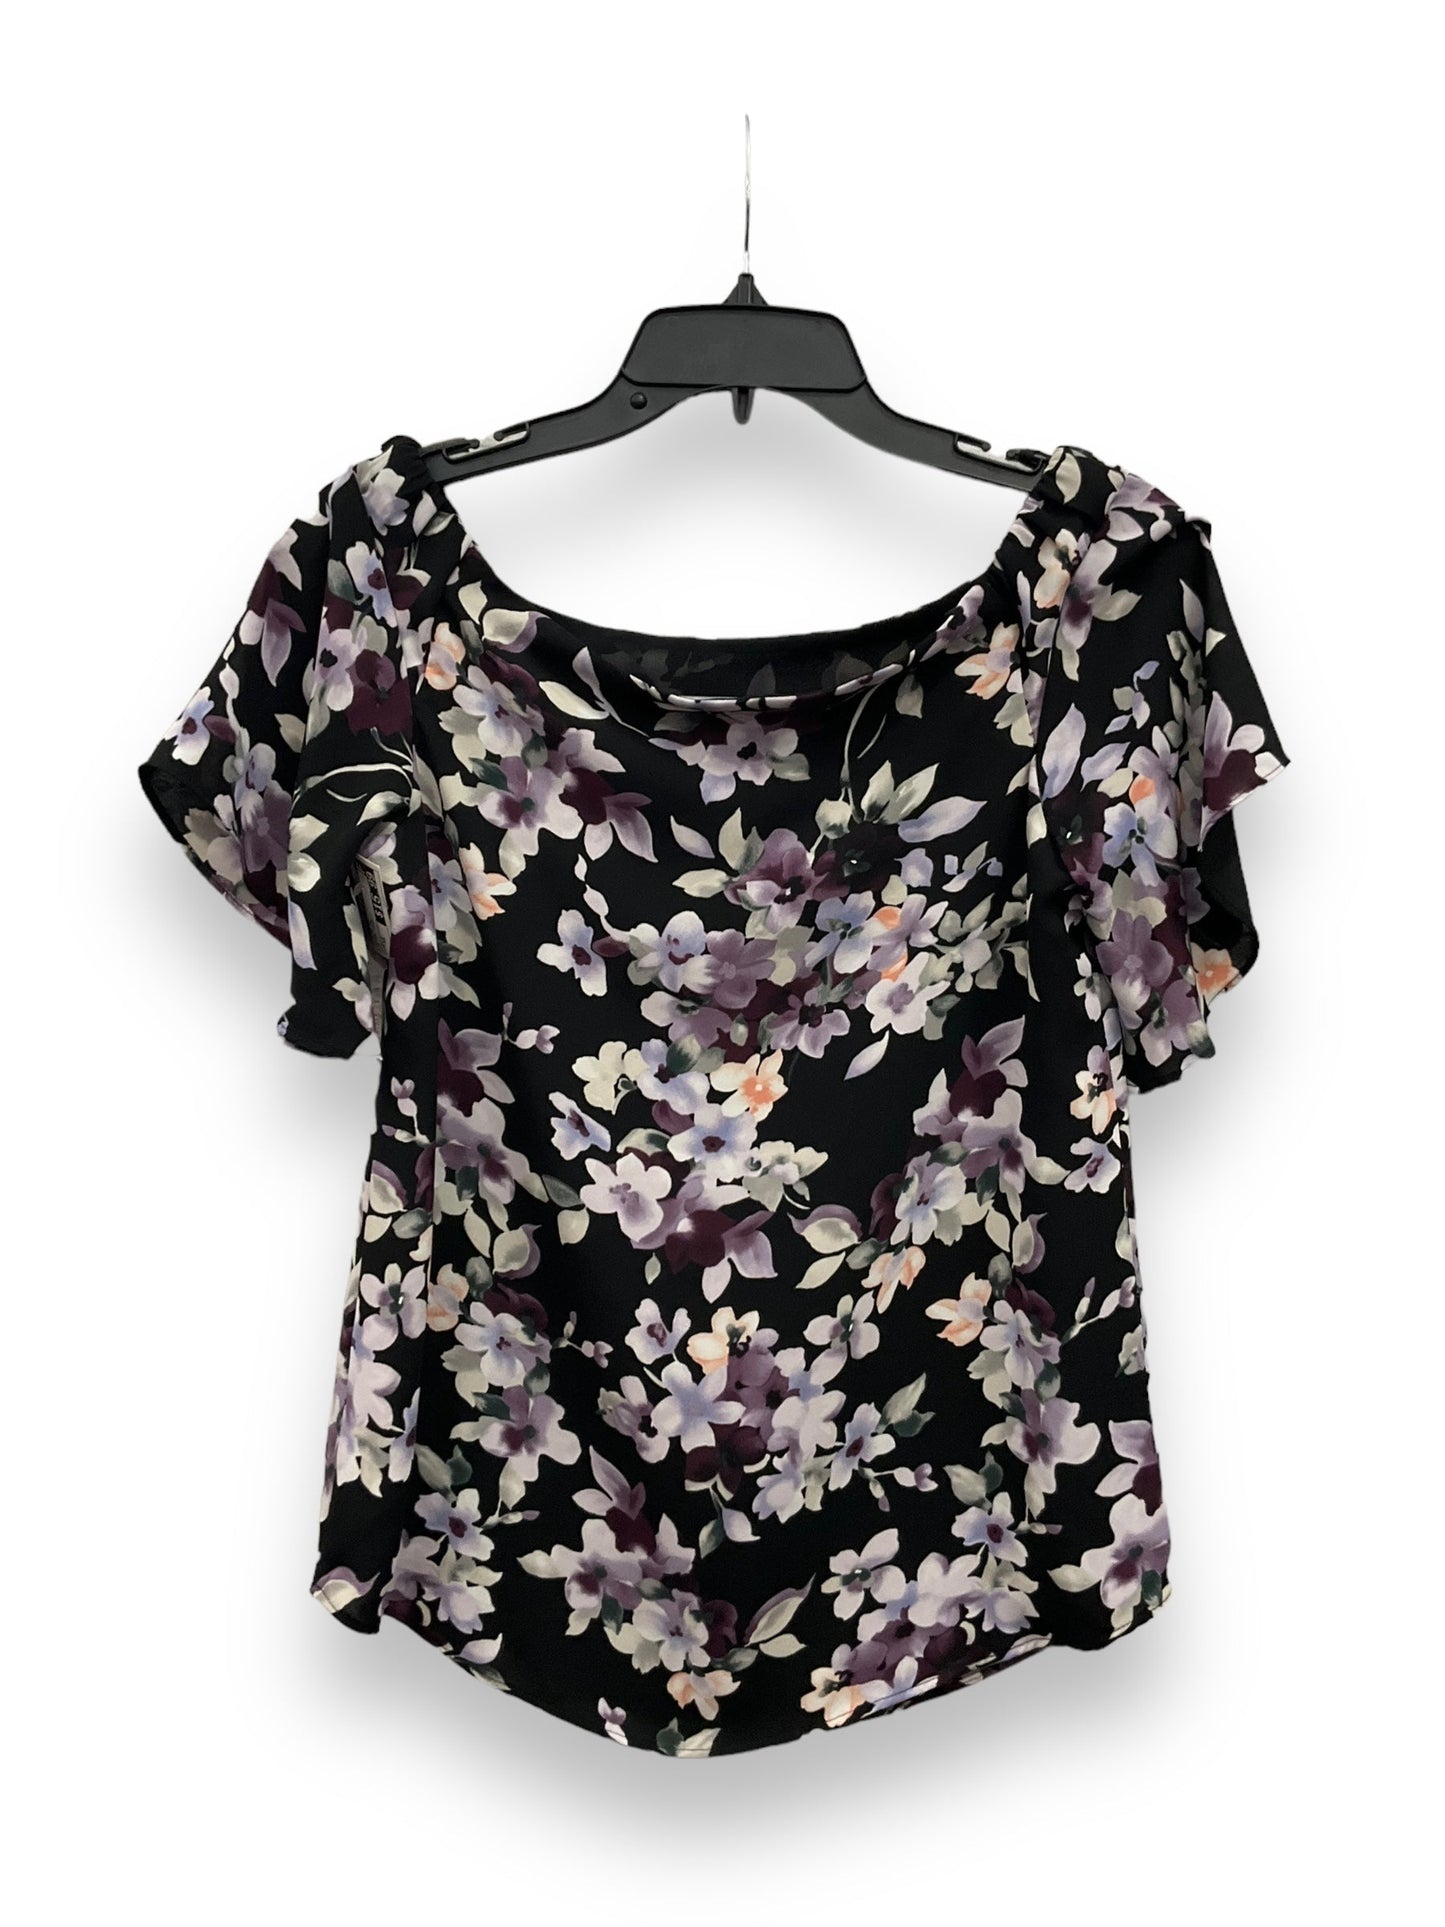 Floral Print Blouse Short Sleeve White House Black Market, Size Xs